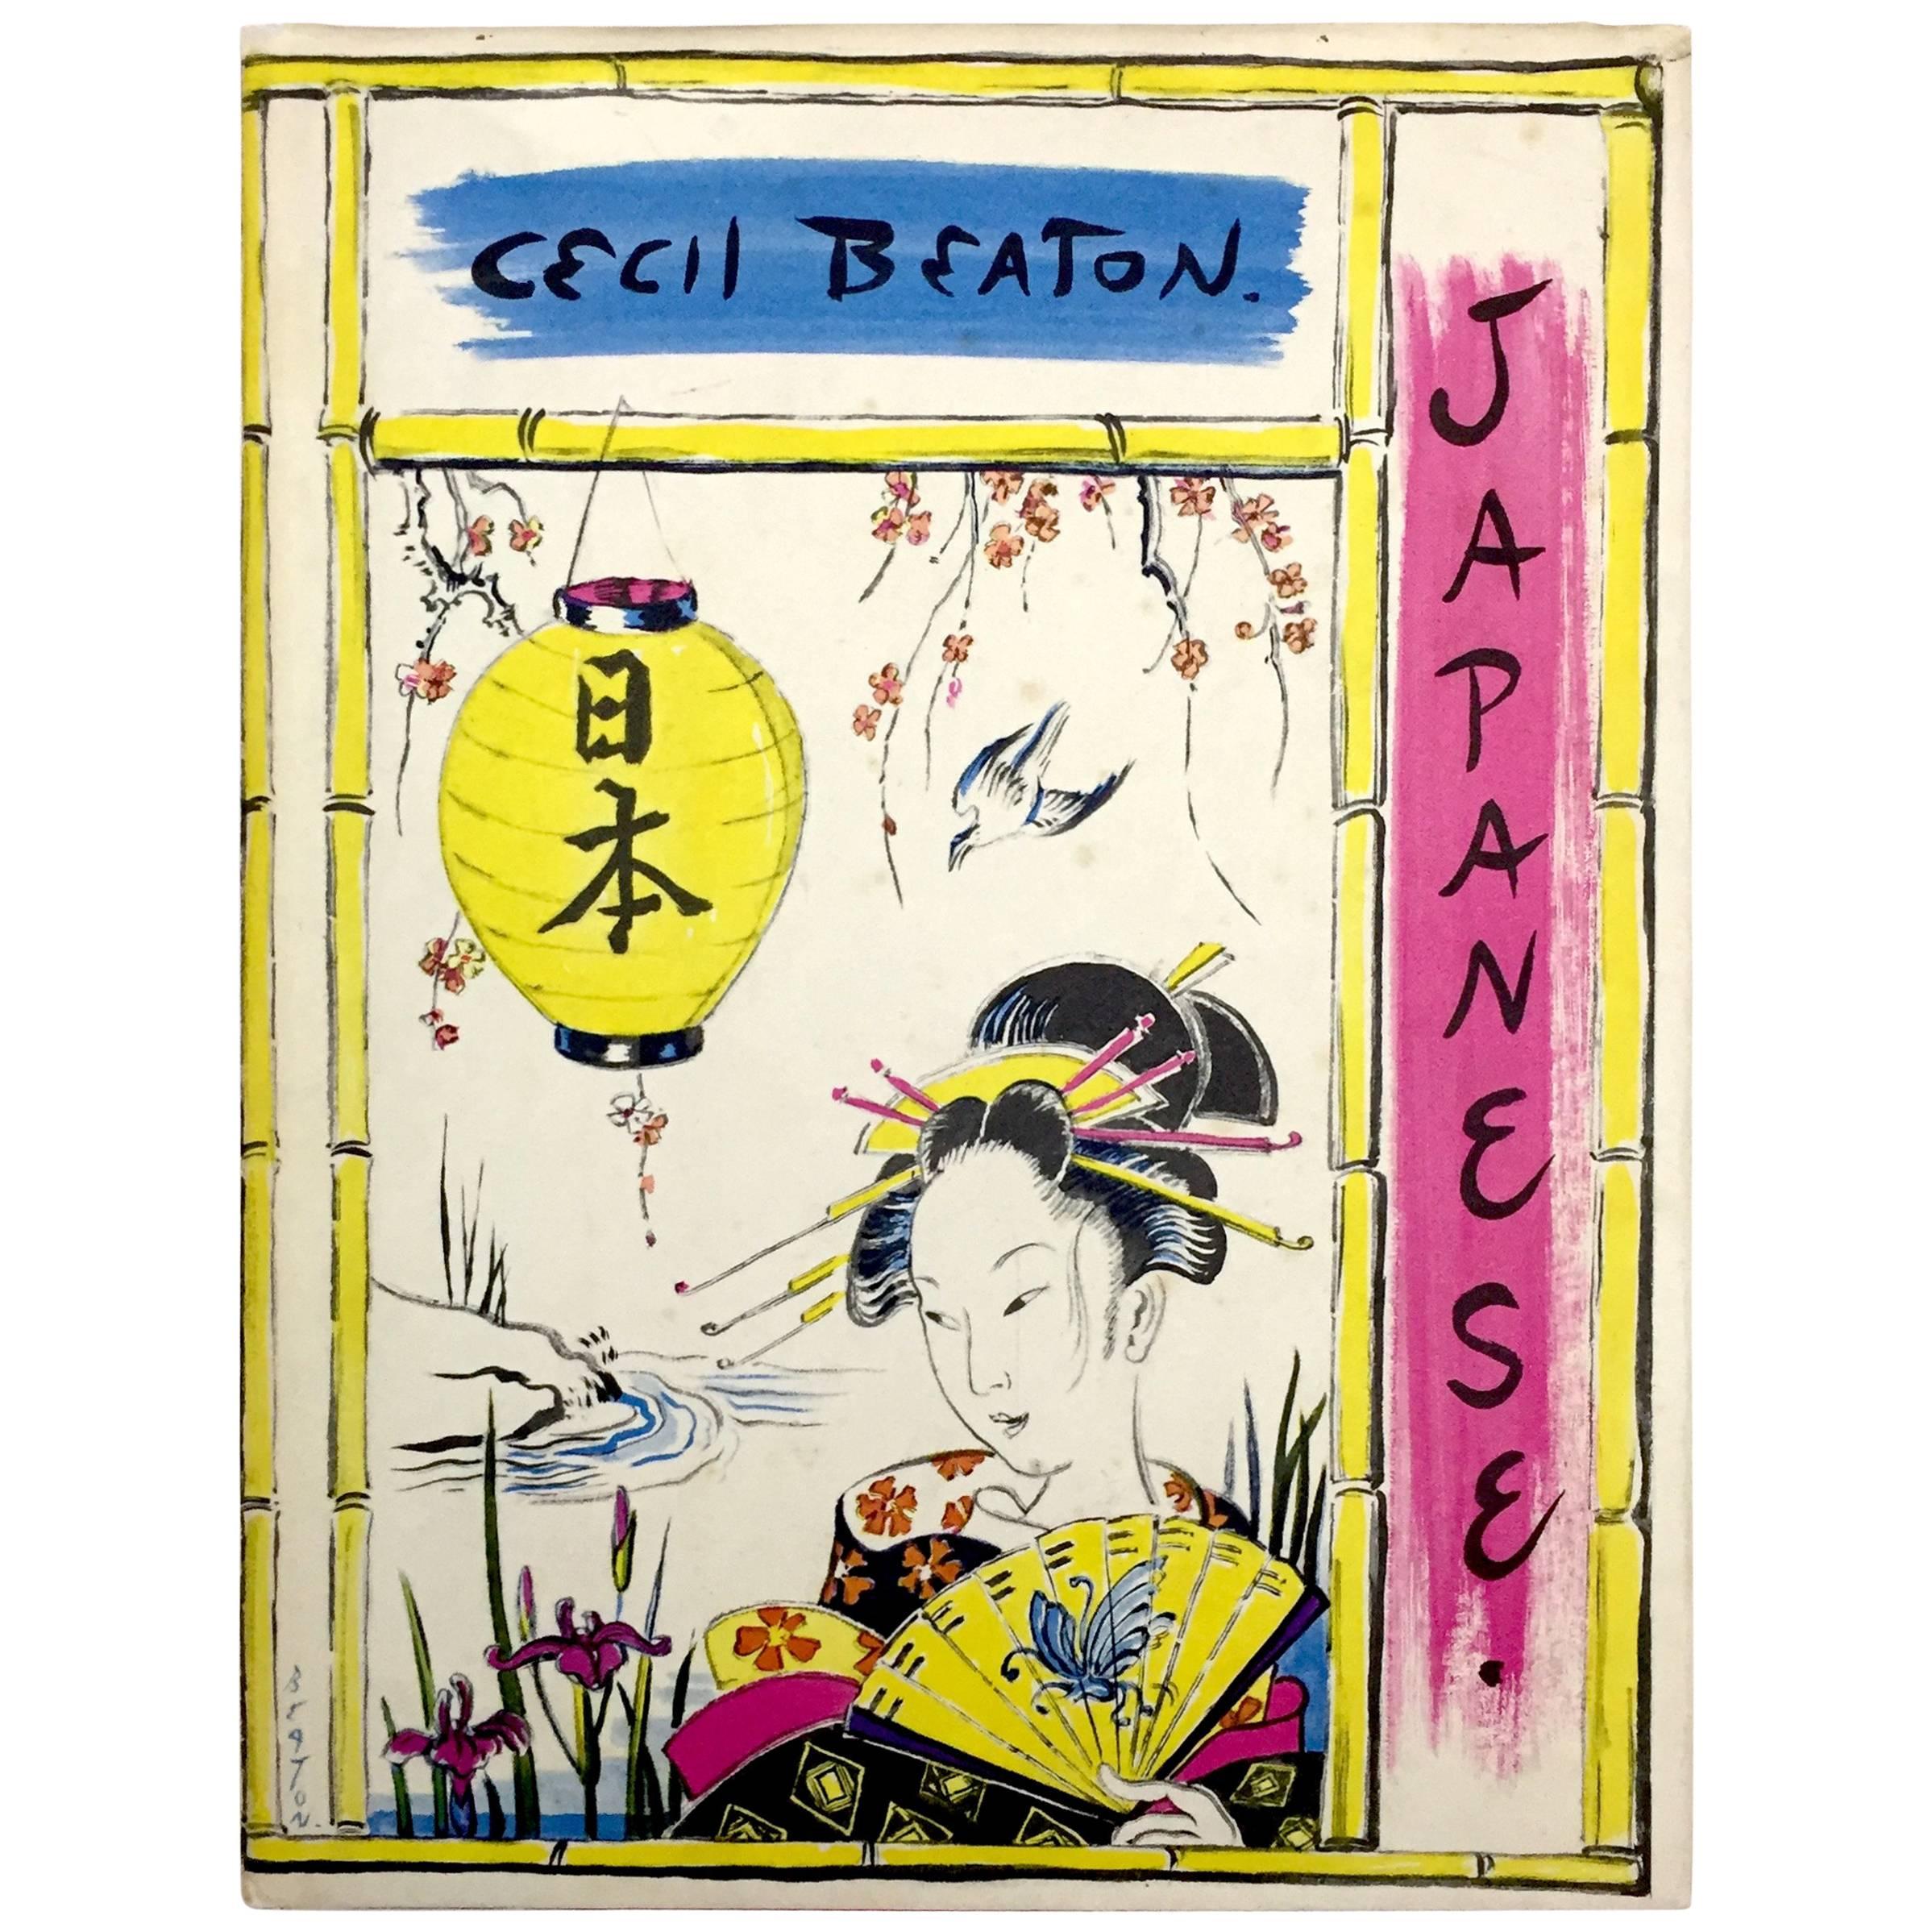 Cecil Beaton Book, "Japanese" - 1959